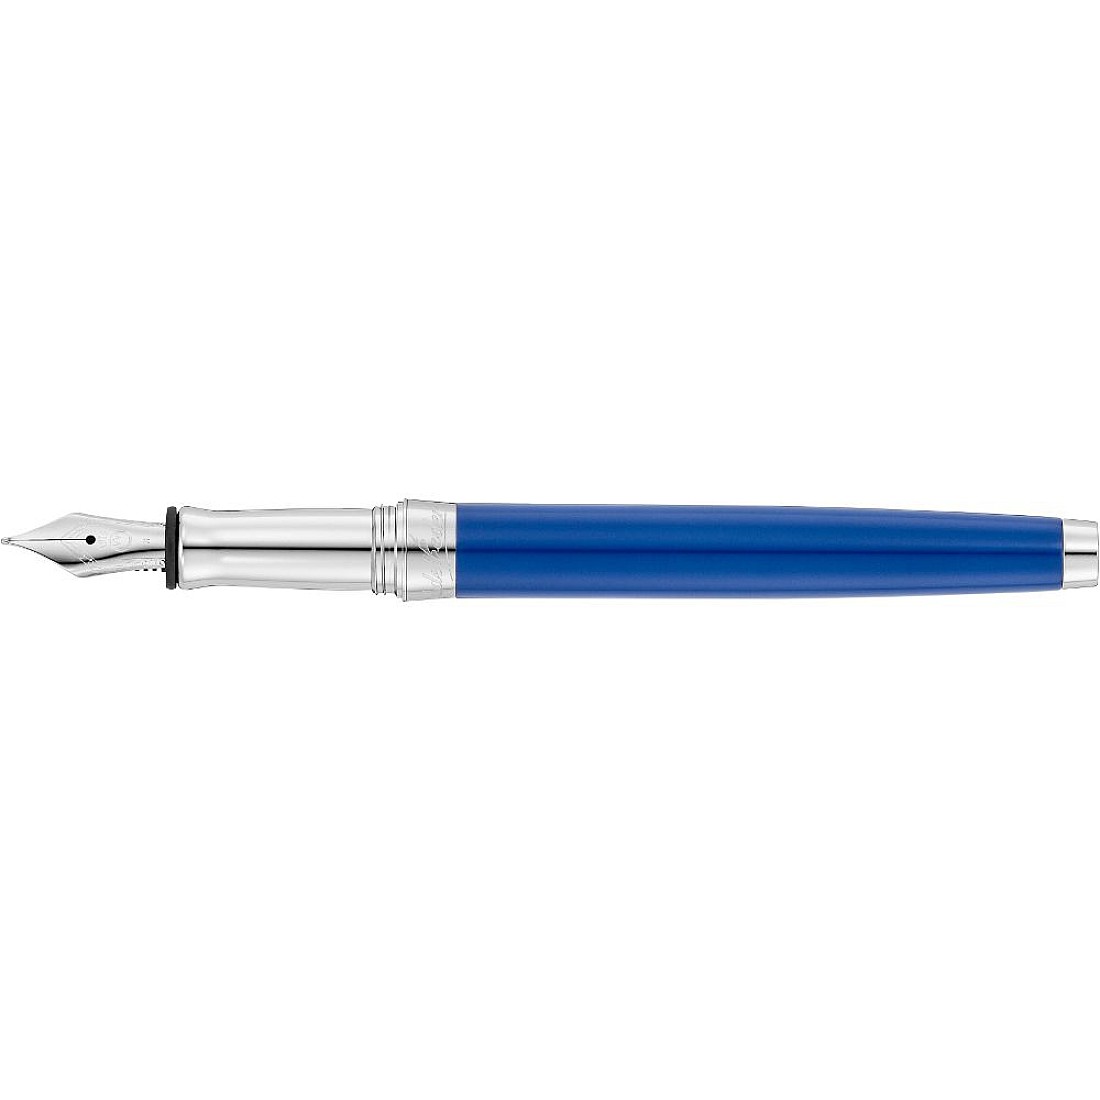 Waldmann Edelfeder Marine Blue Fountain pen - / Fountain pen | Appelboom.com